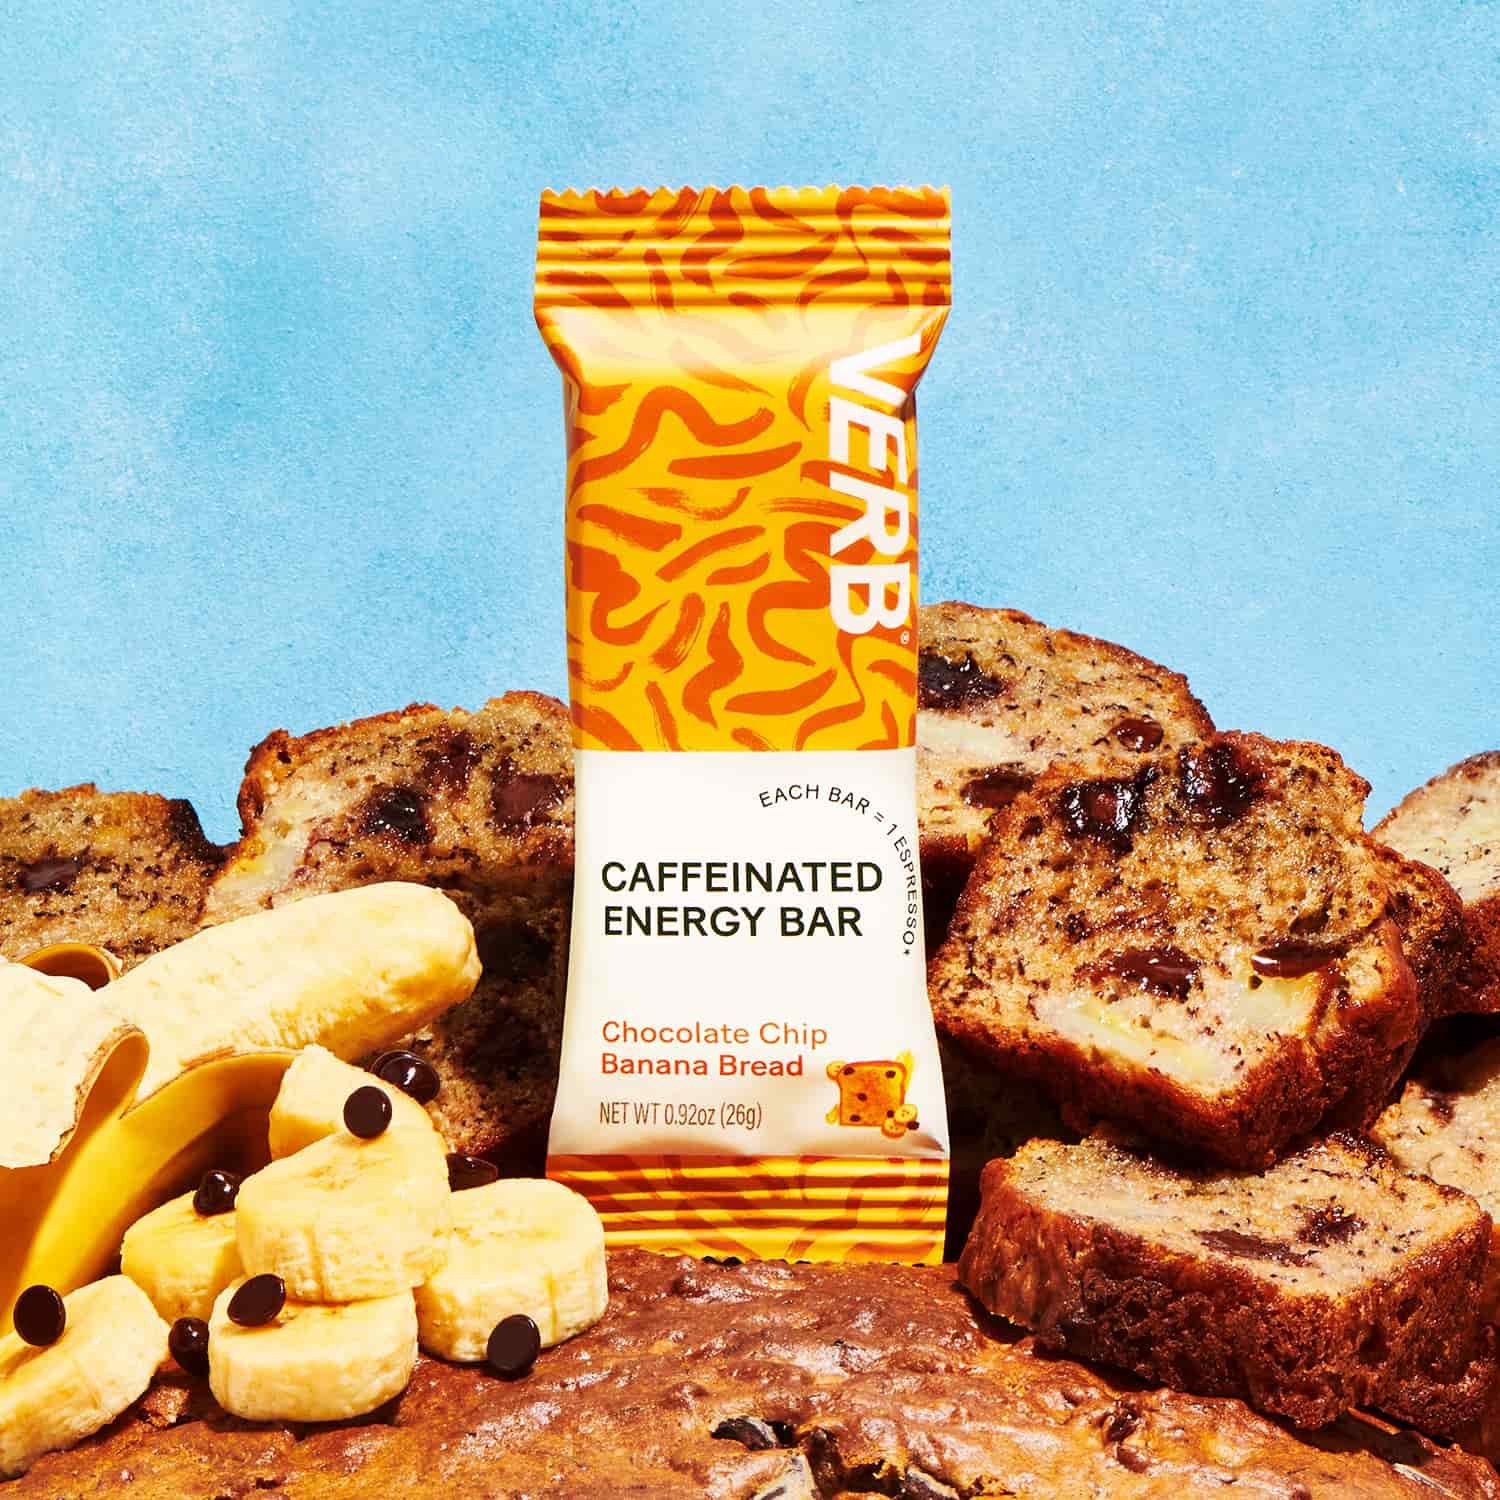 16 Chocolate Chip Banana Bread snack bars | Verb Energy